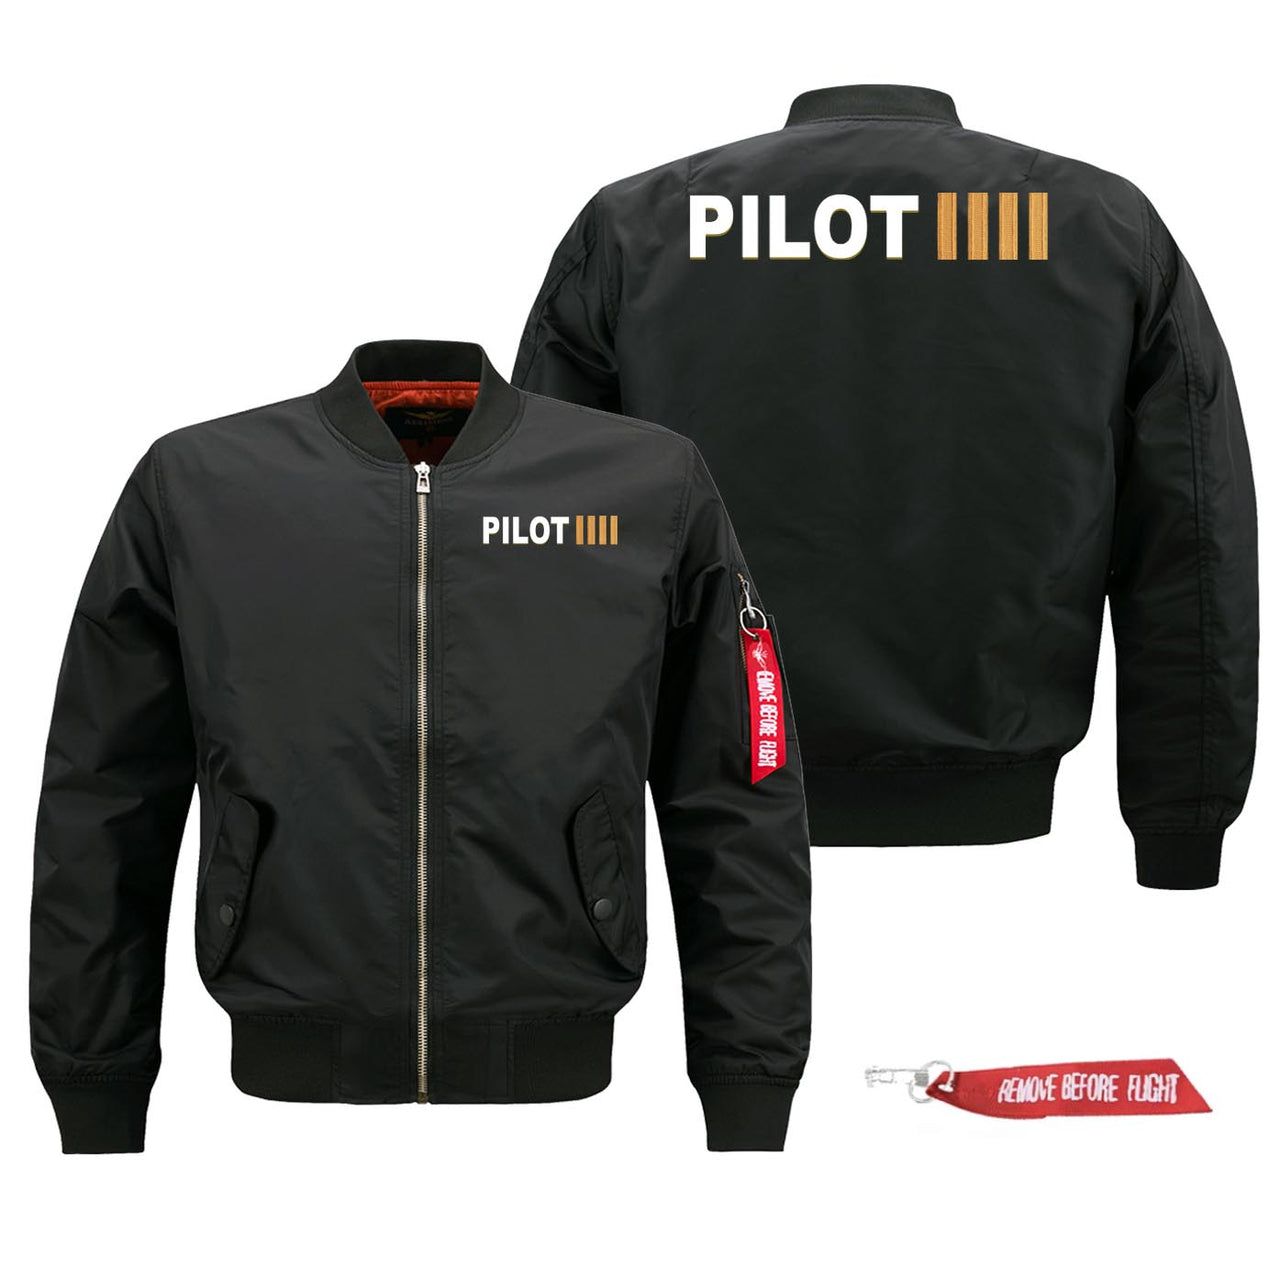 Pilot & Original Epaulettes (4 Lines) Designed Pilot Jackets (Customizable)